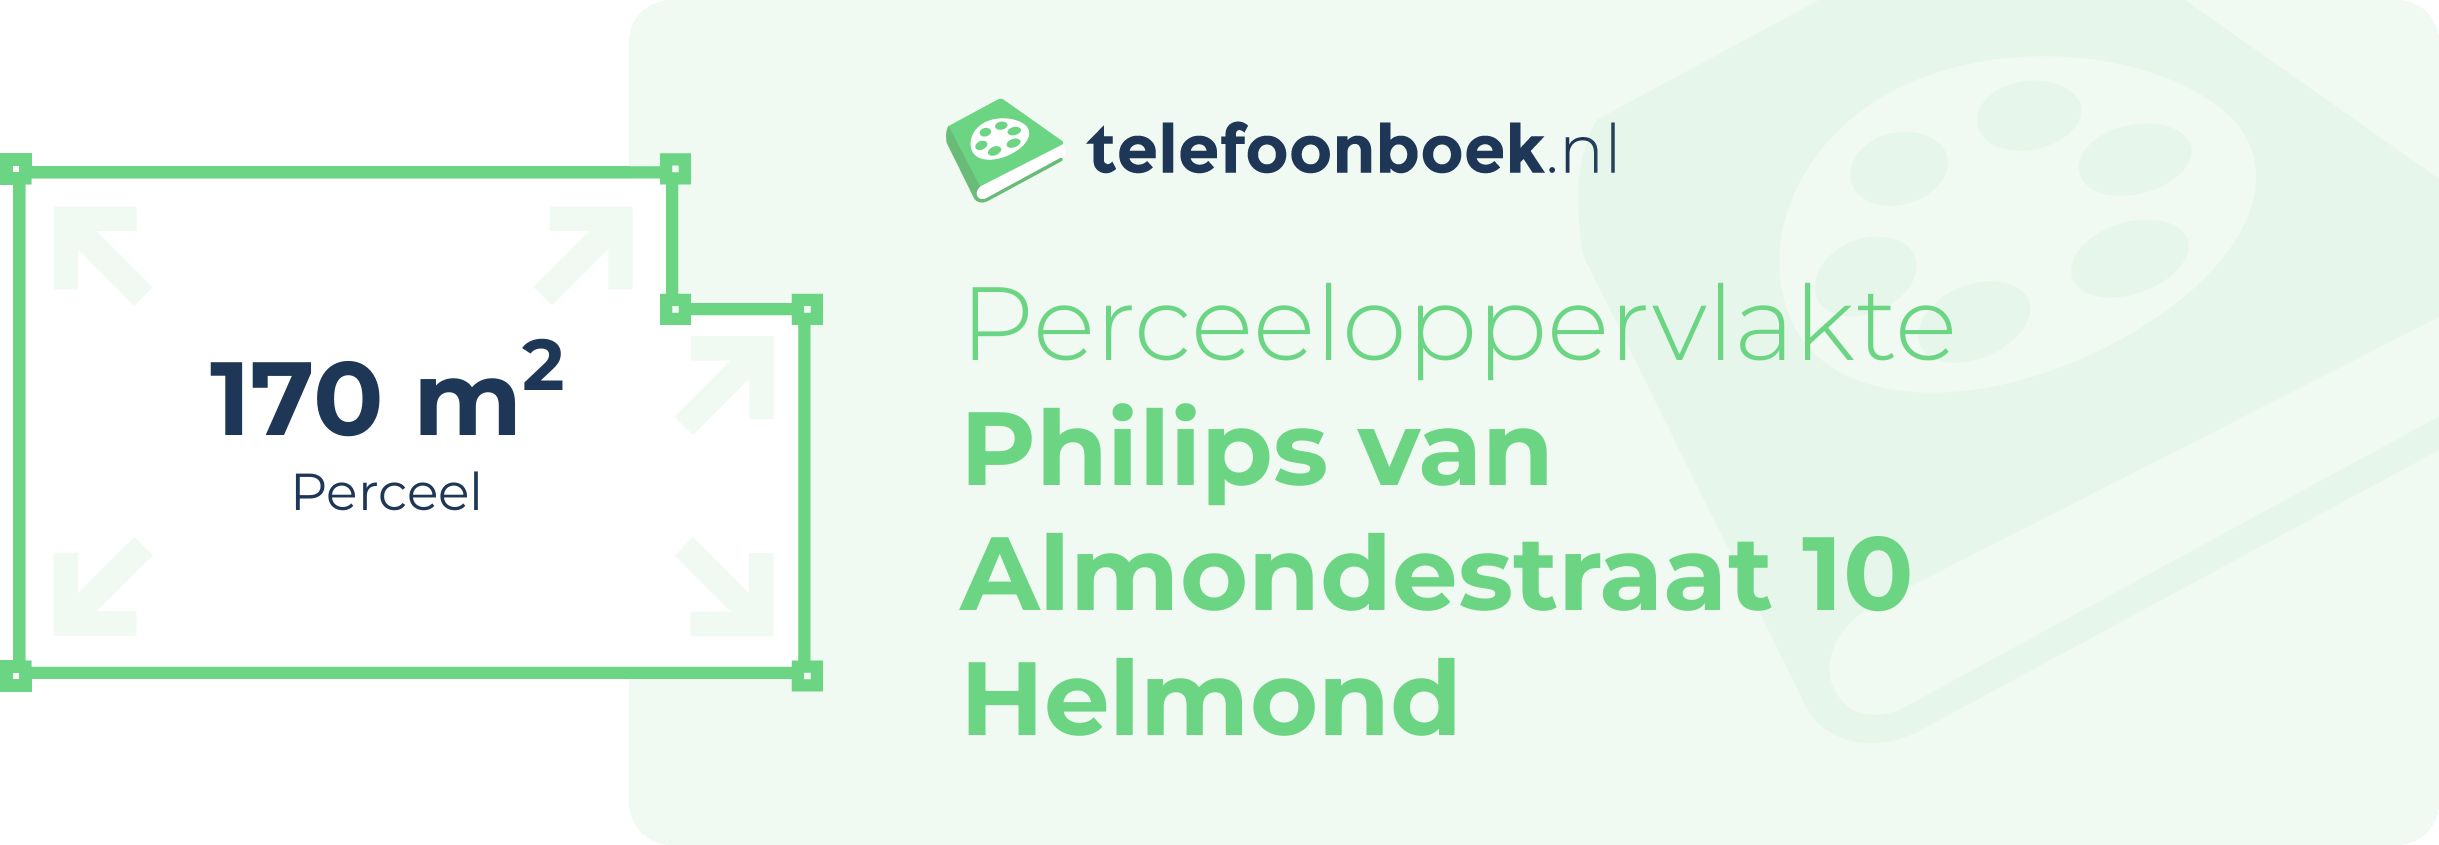 Perceeloppervlakte Philips Van Almondestraat 10 Helmond